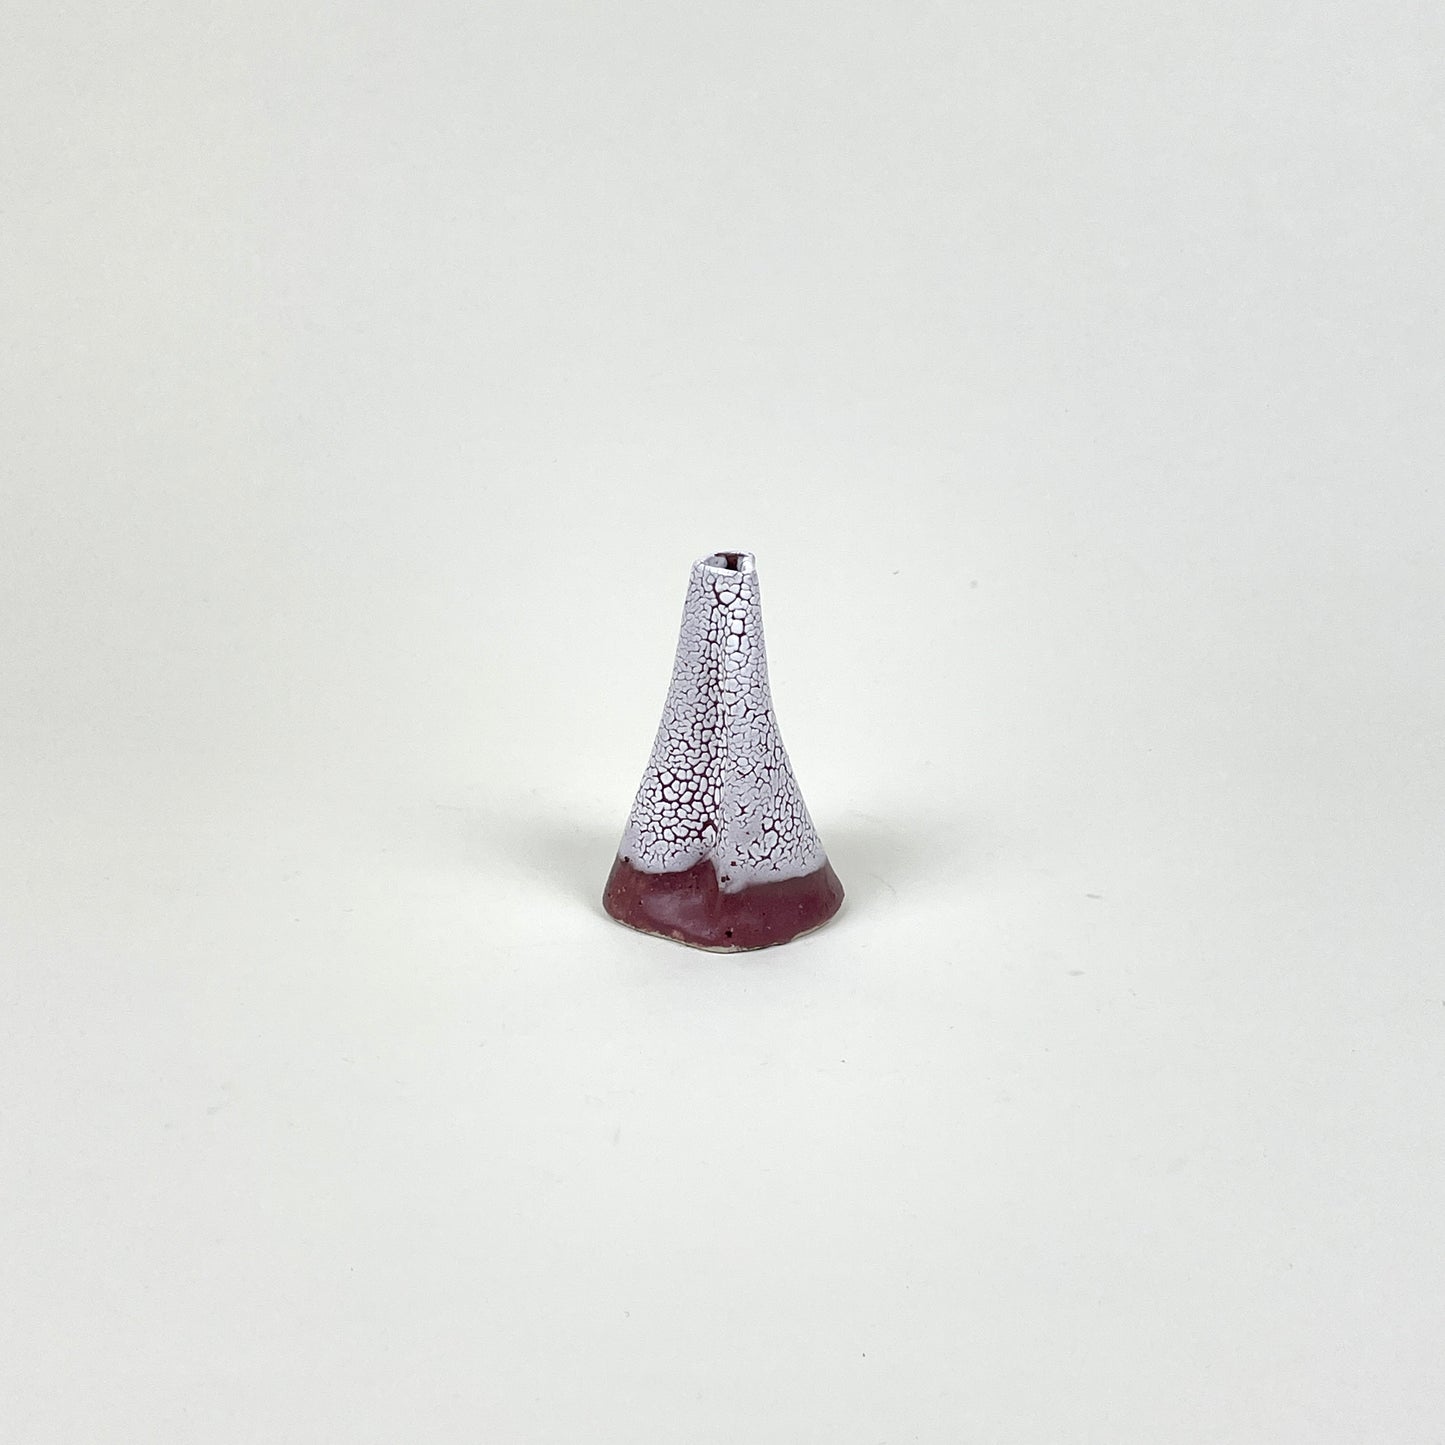 Burgundy and white volcano vase (S) by Astrid Öhman.